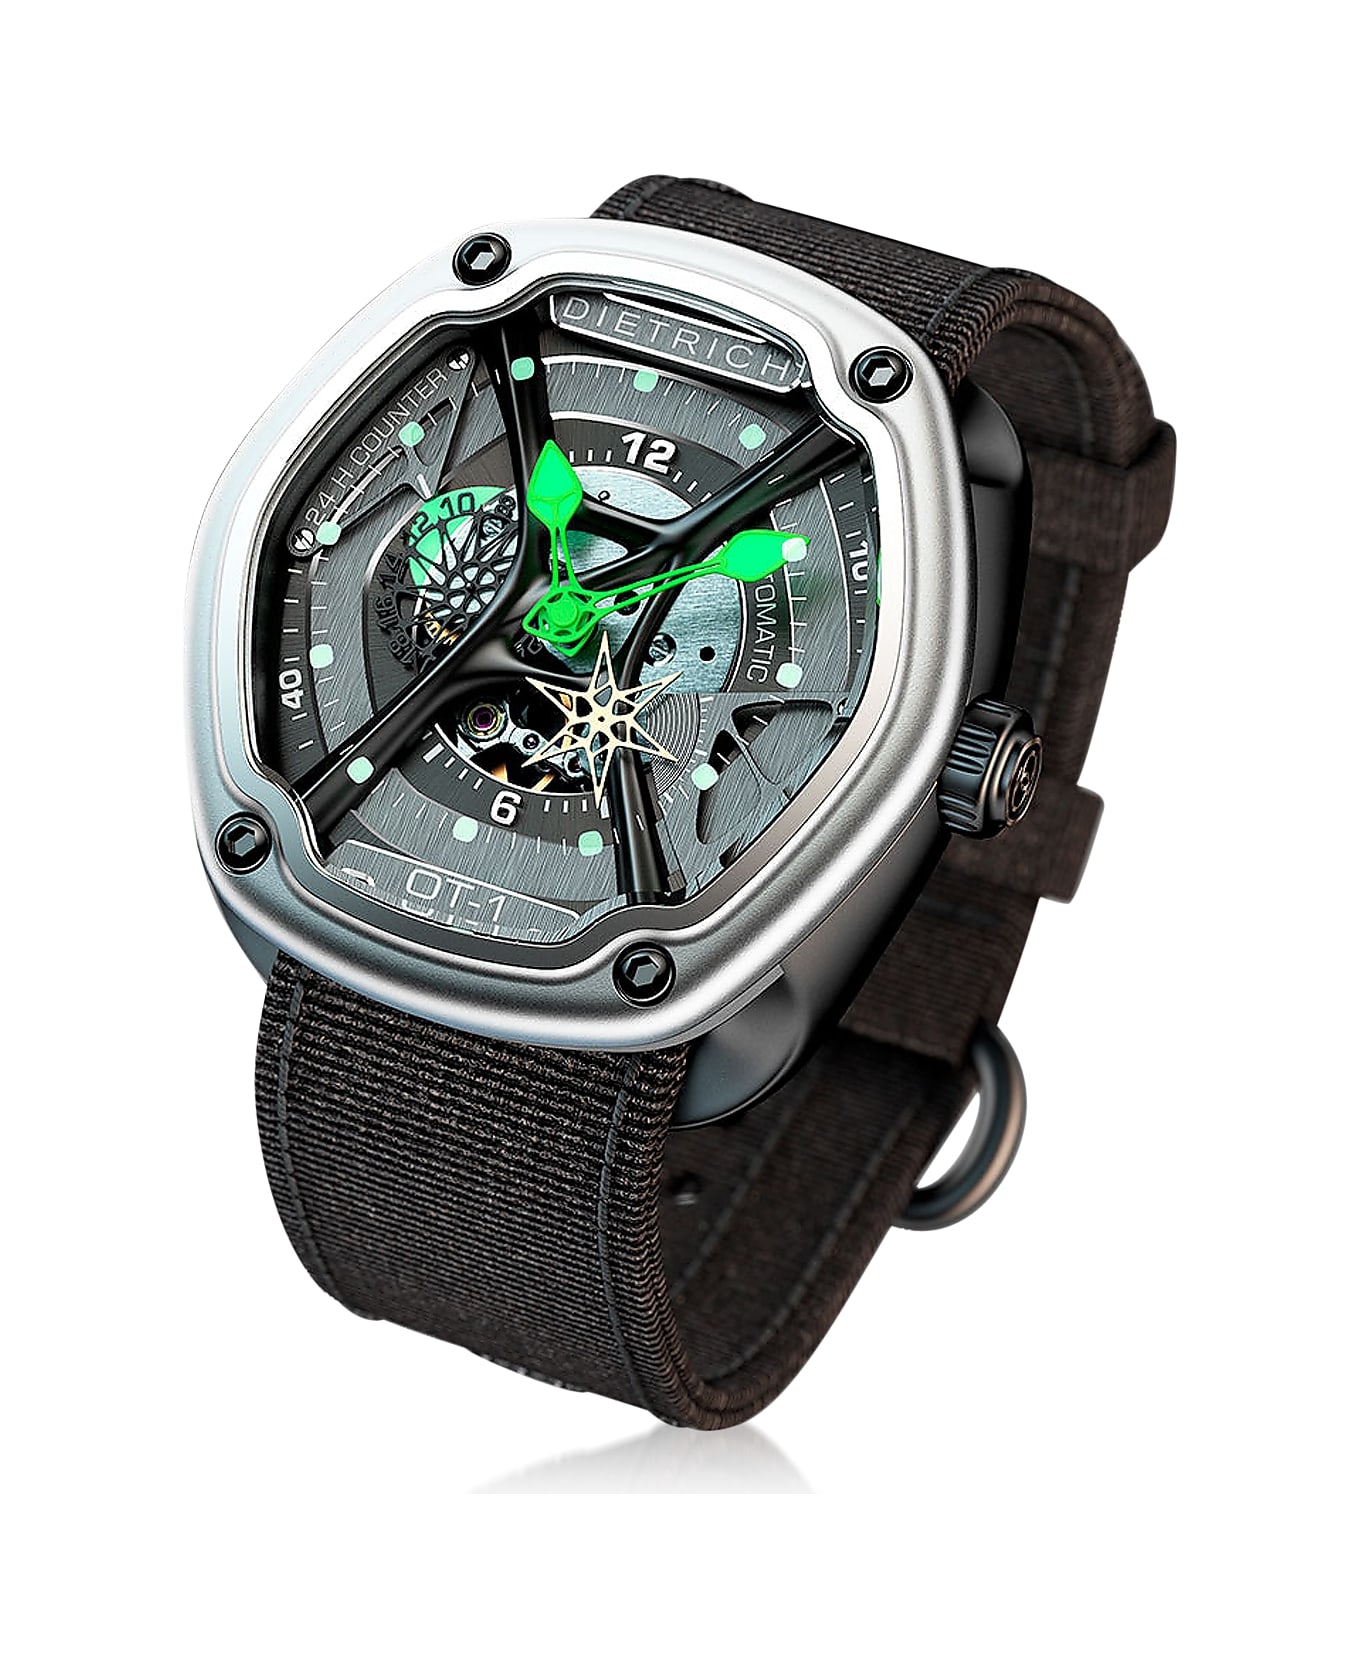 Dietrich Ot-1 316l Steel Men's Watch W/green Luminova And Nylon Strap - Black